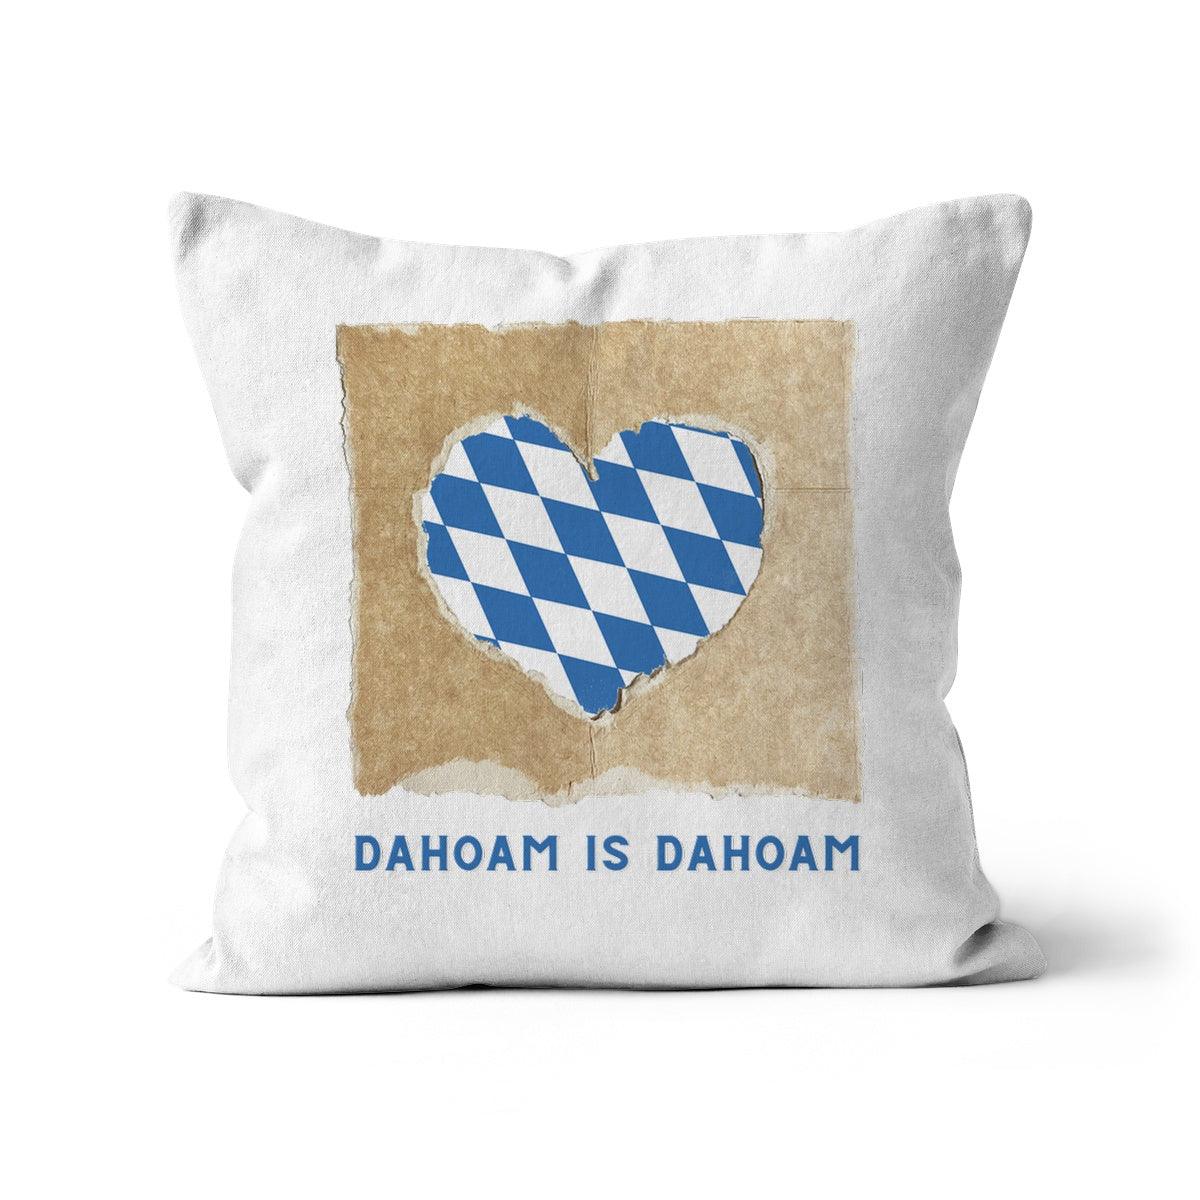 Bavarian Cushion, Blue & White Heart print "Dahoam is Dahoam", incl. filling - Bavari Shop - Bavarian Outfits, Dirndl, Lederhosen & Accessories